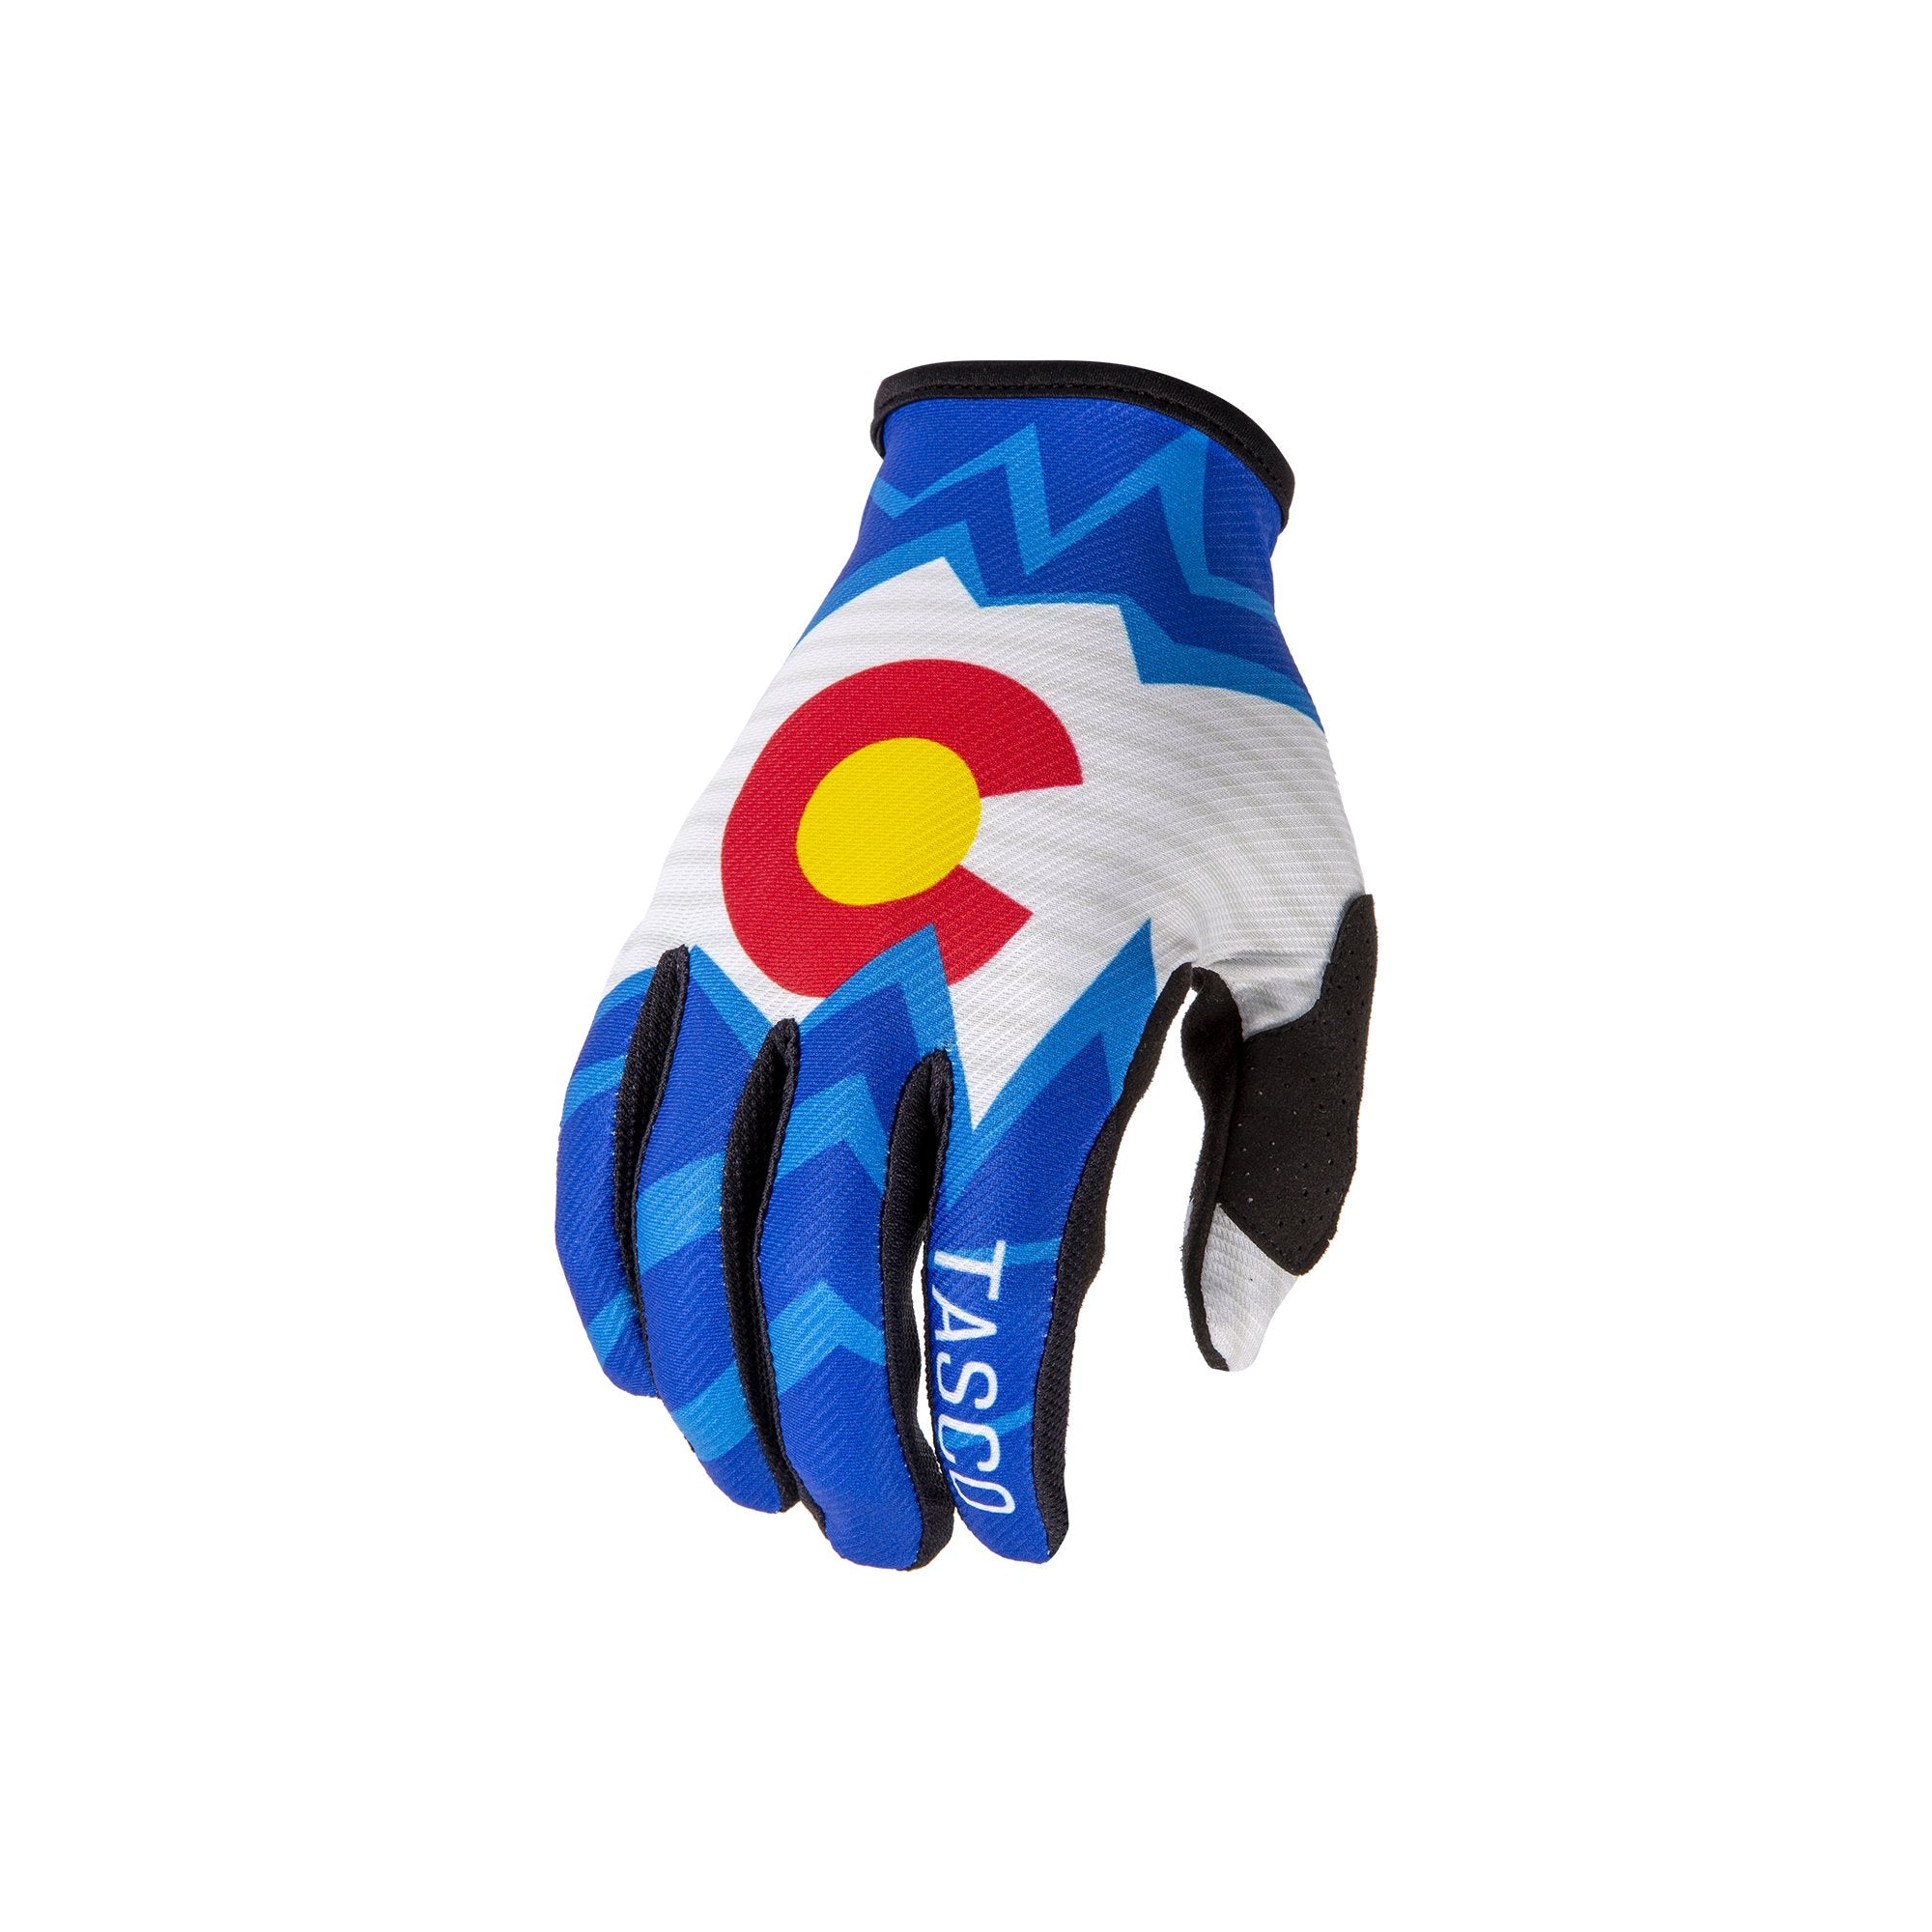 Ridgeline MTB Gloves - Colorado